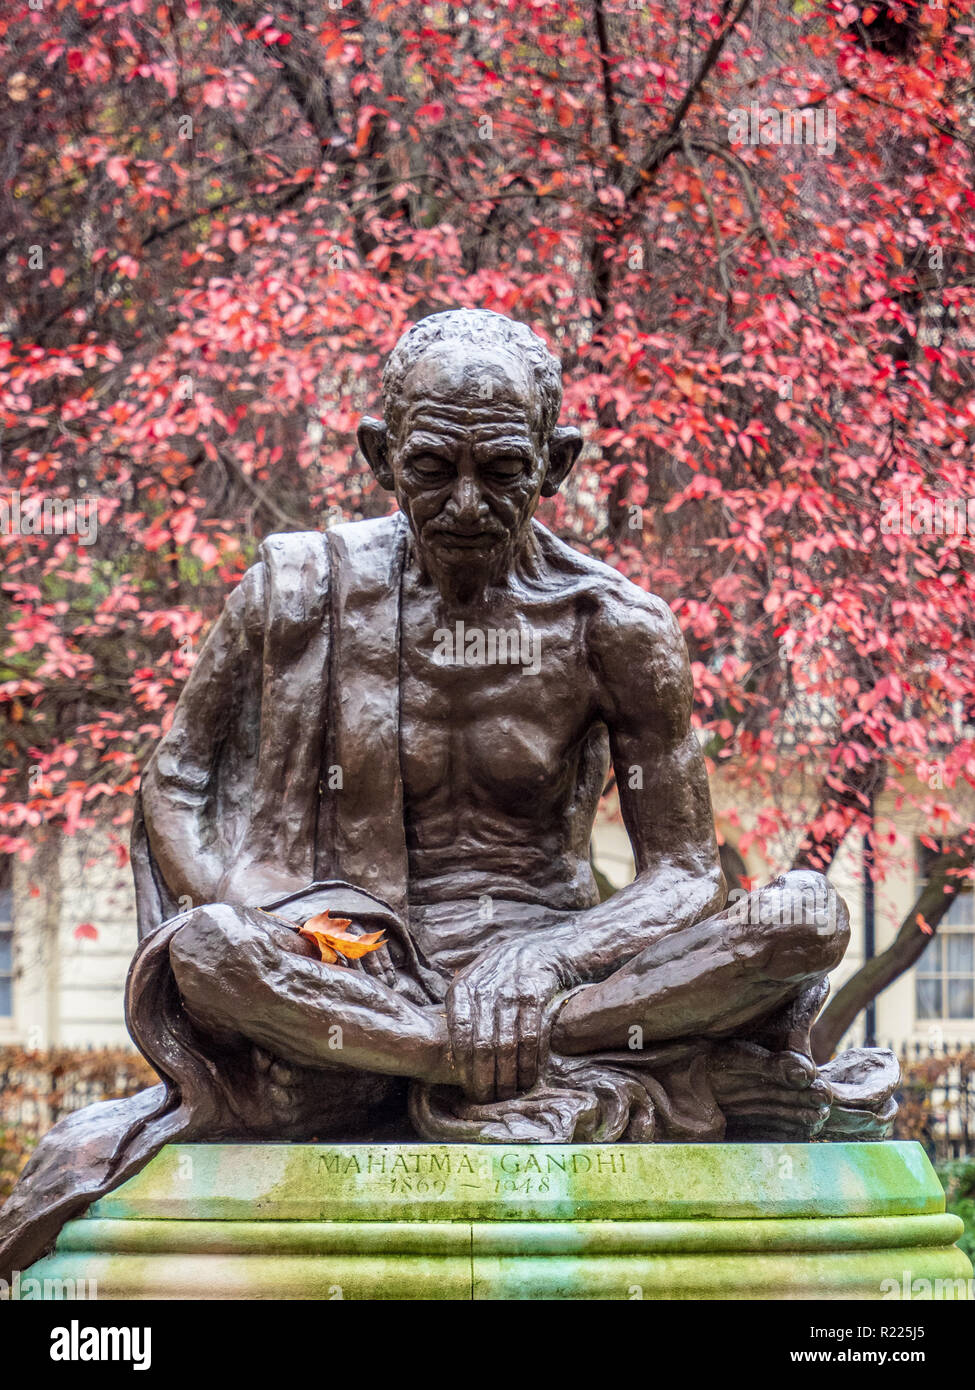 Mahatma Gandhi statue en Tavistock Square Gardens Bloomsbury Londres. Sculpté par Fredda brillante et installé en 1968 Banque D'Images